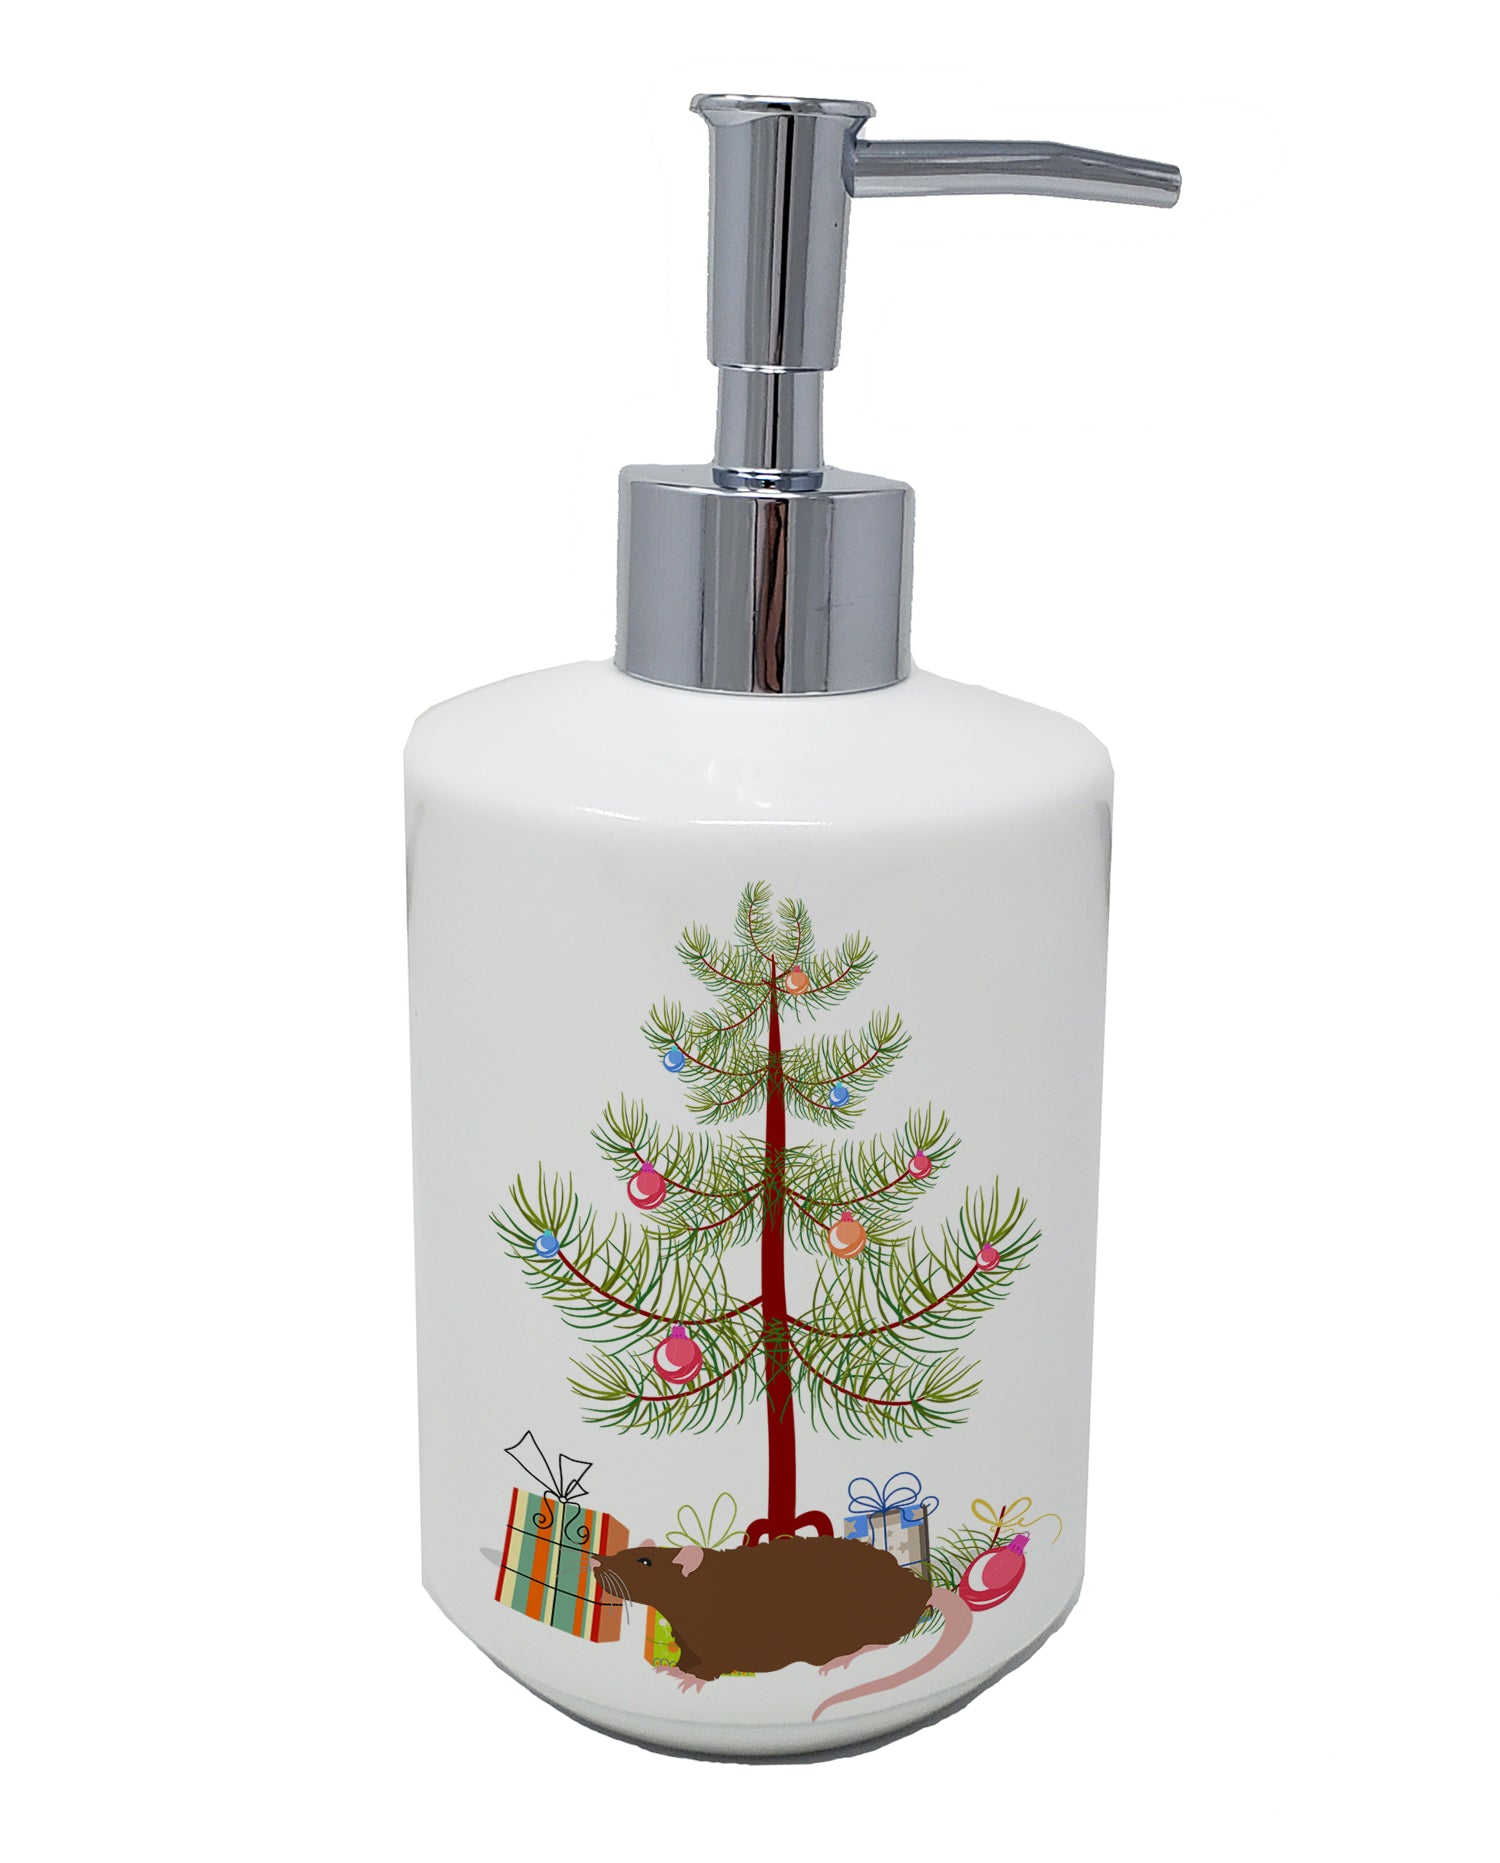 Buy this Rex Rat Merry Christmas Ceramic Soap Dispenser